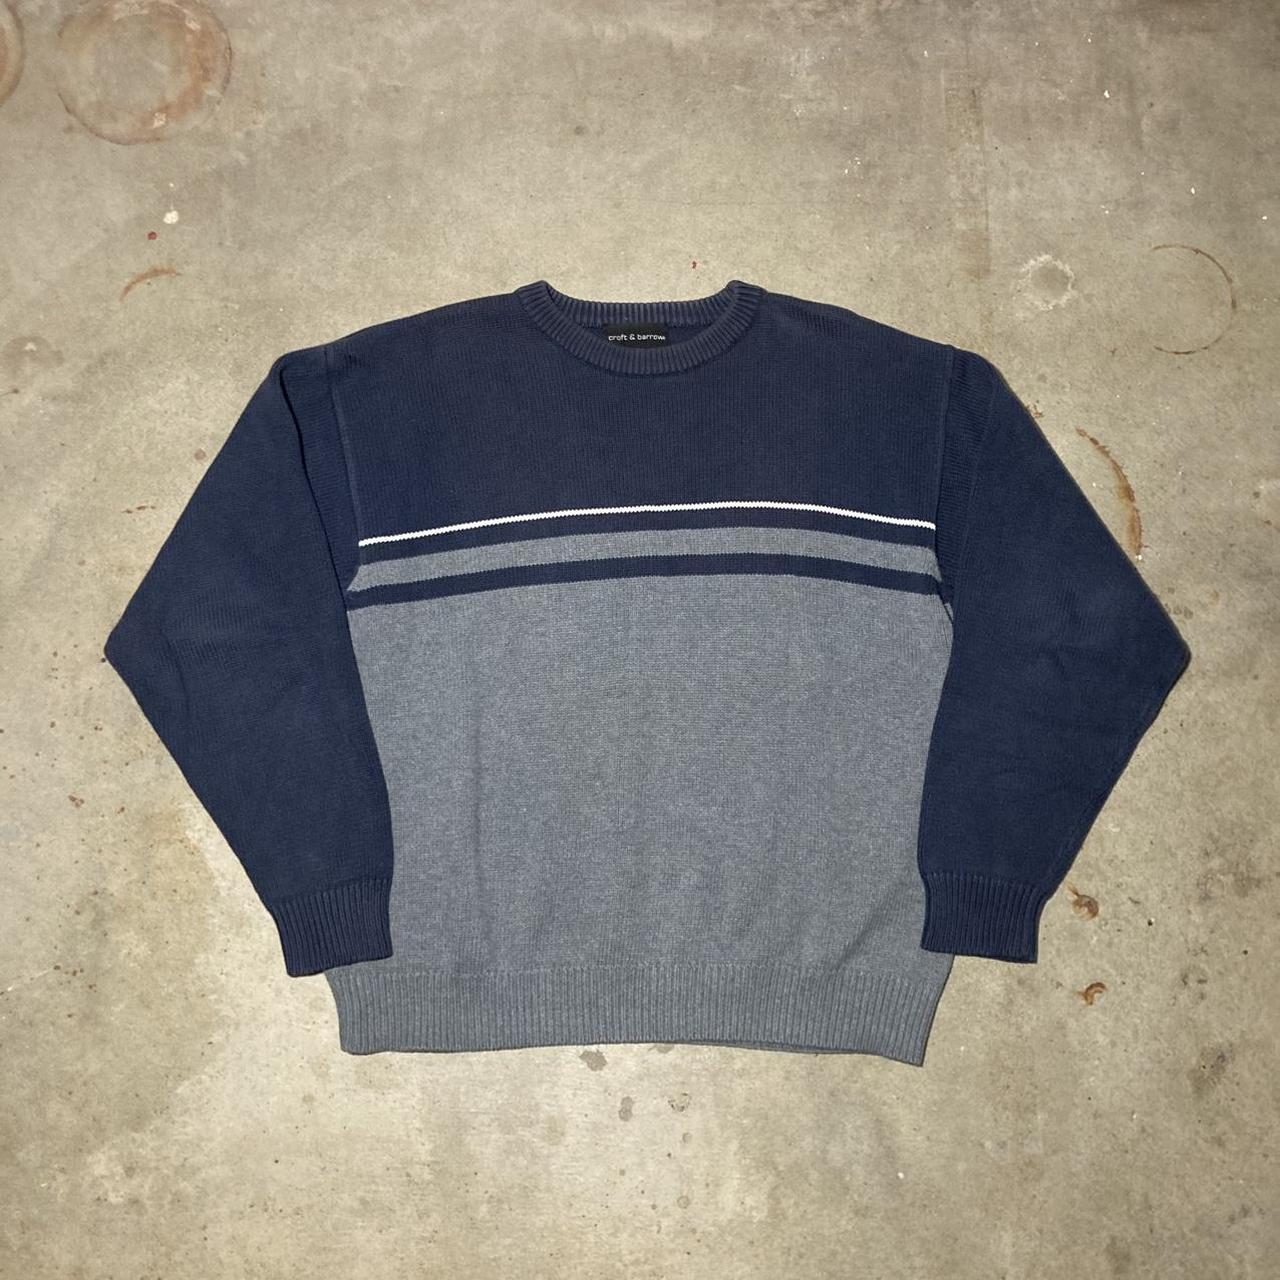 Vintage grandpa sweater croft and barrow 90s knit... - Depop